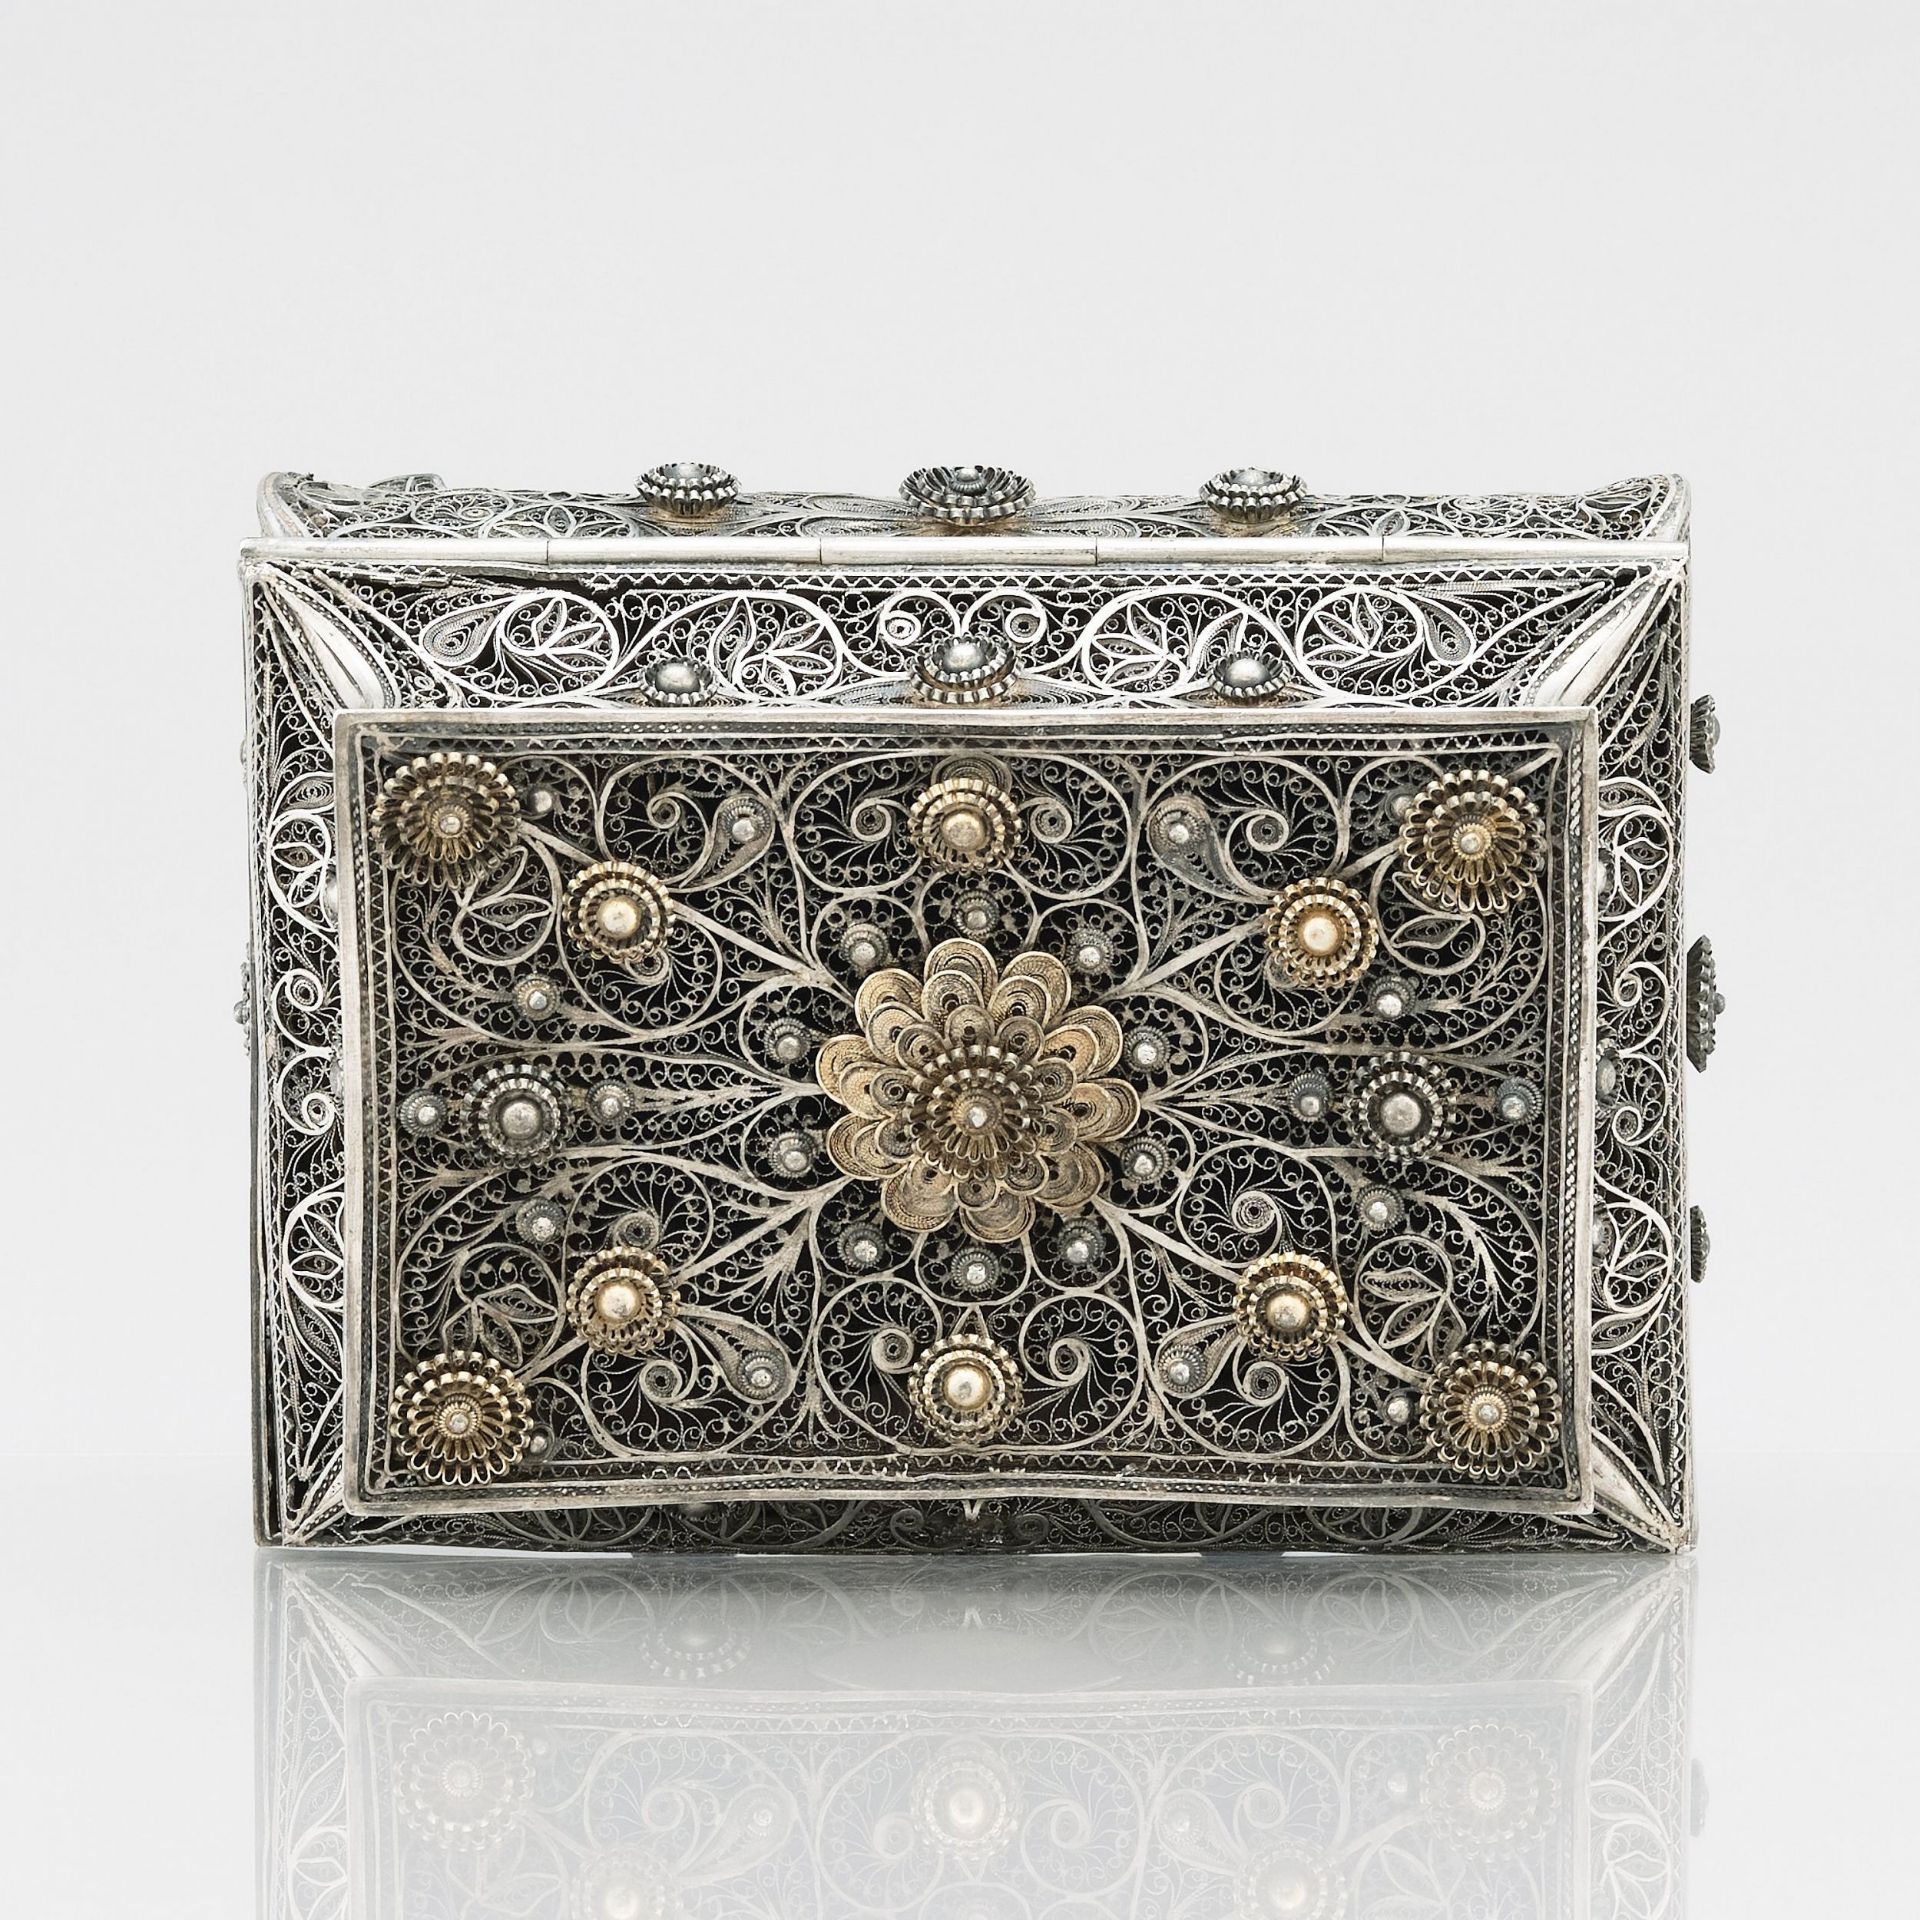 Silver filigree box from the 19th century. Odessa, Russian Empire, 1898-1908 - Image 4 of 7